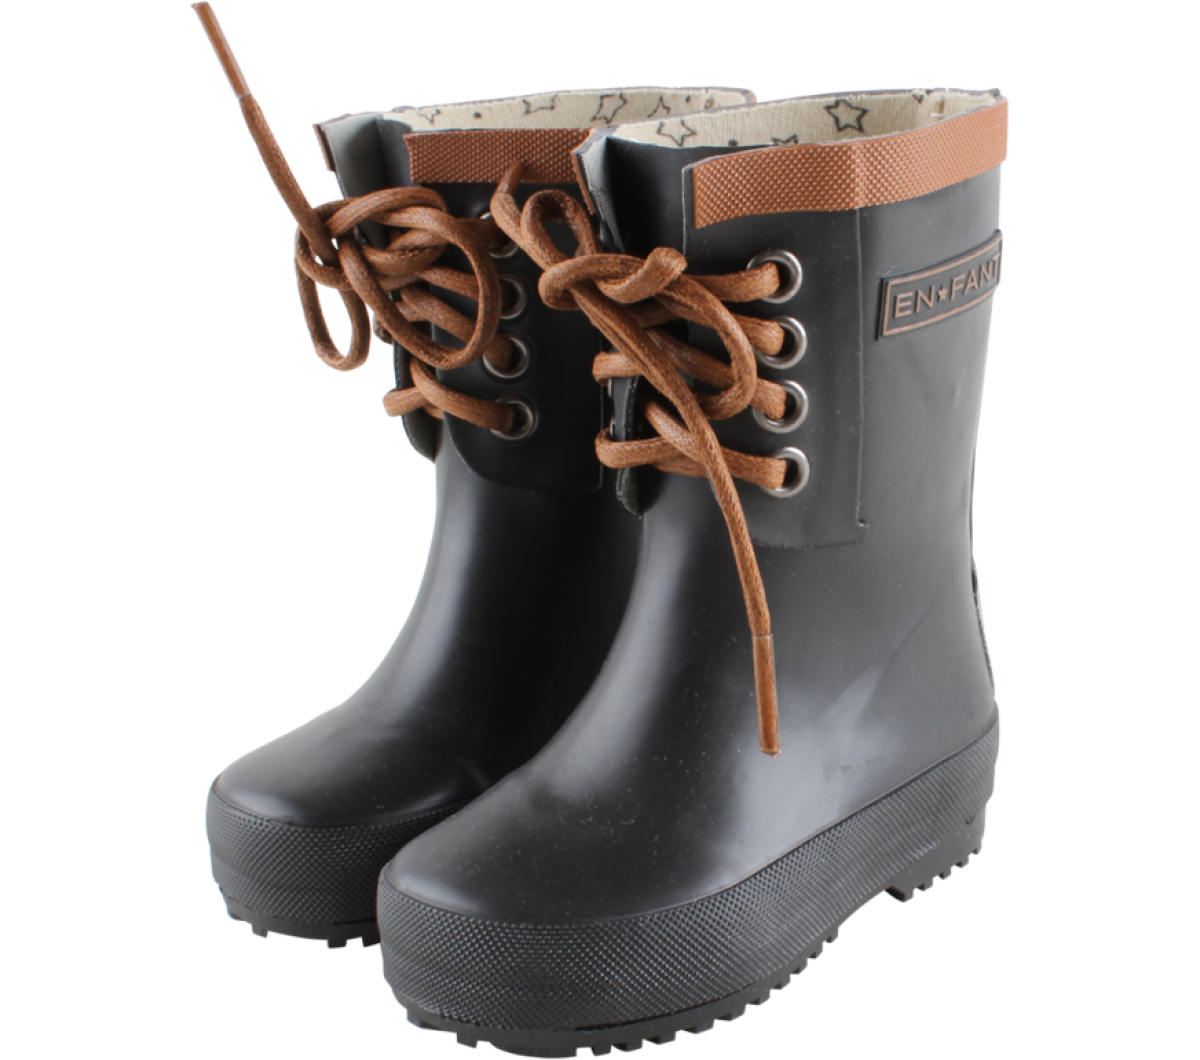 Black Rain Boots PNG High Quality Image